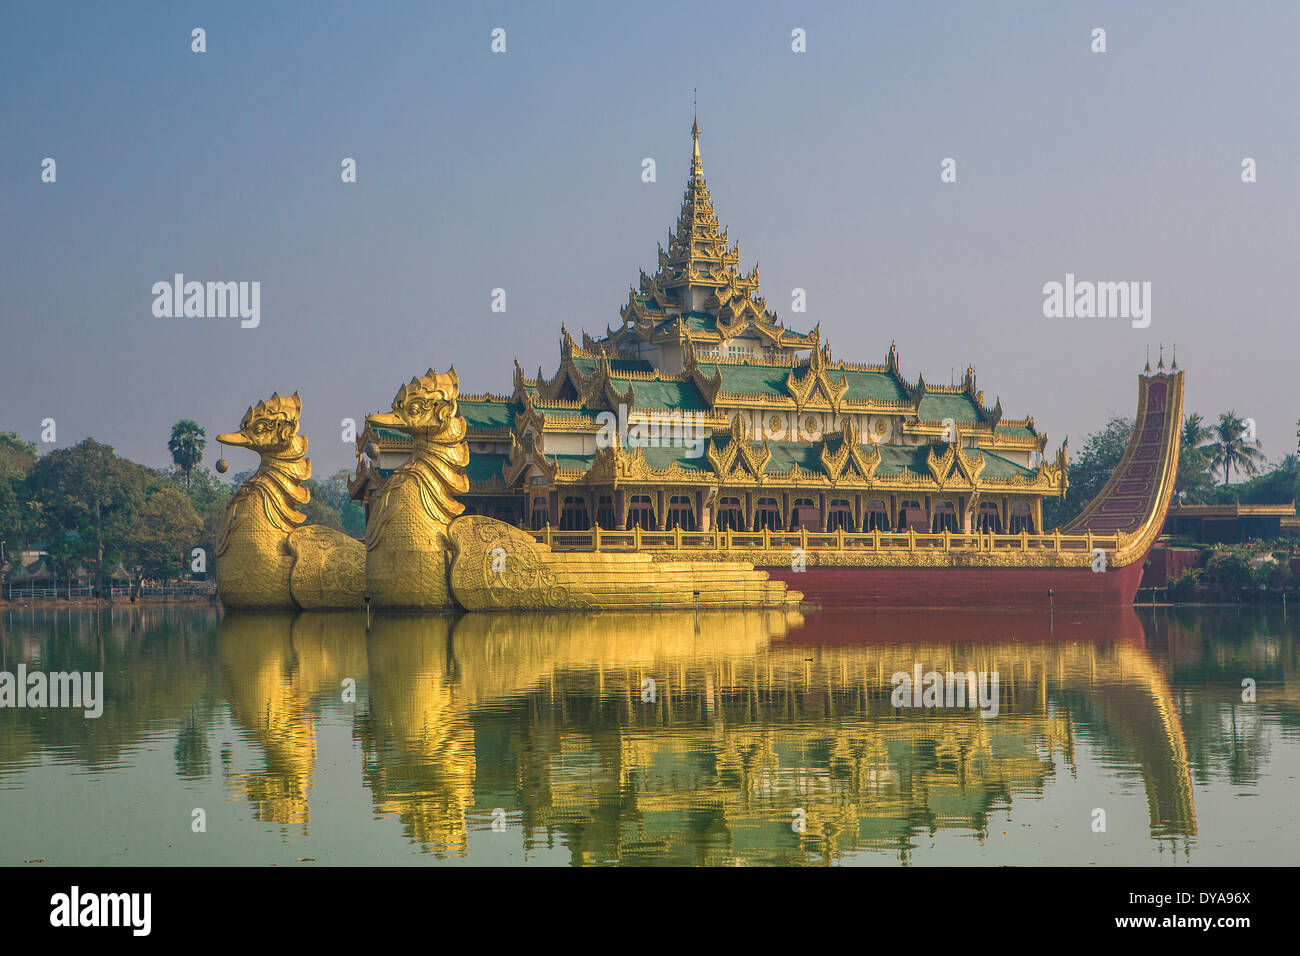 Myanmar Burma Asia Paya Yangon Rangoon Kandawgyi Floating architecture colourful famous flowers image lake reflection resta Stock Photo